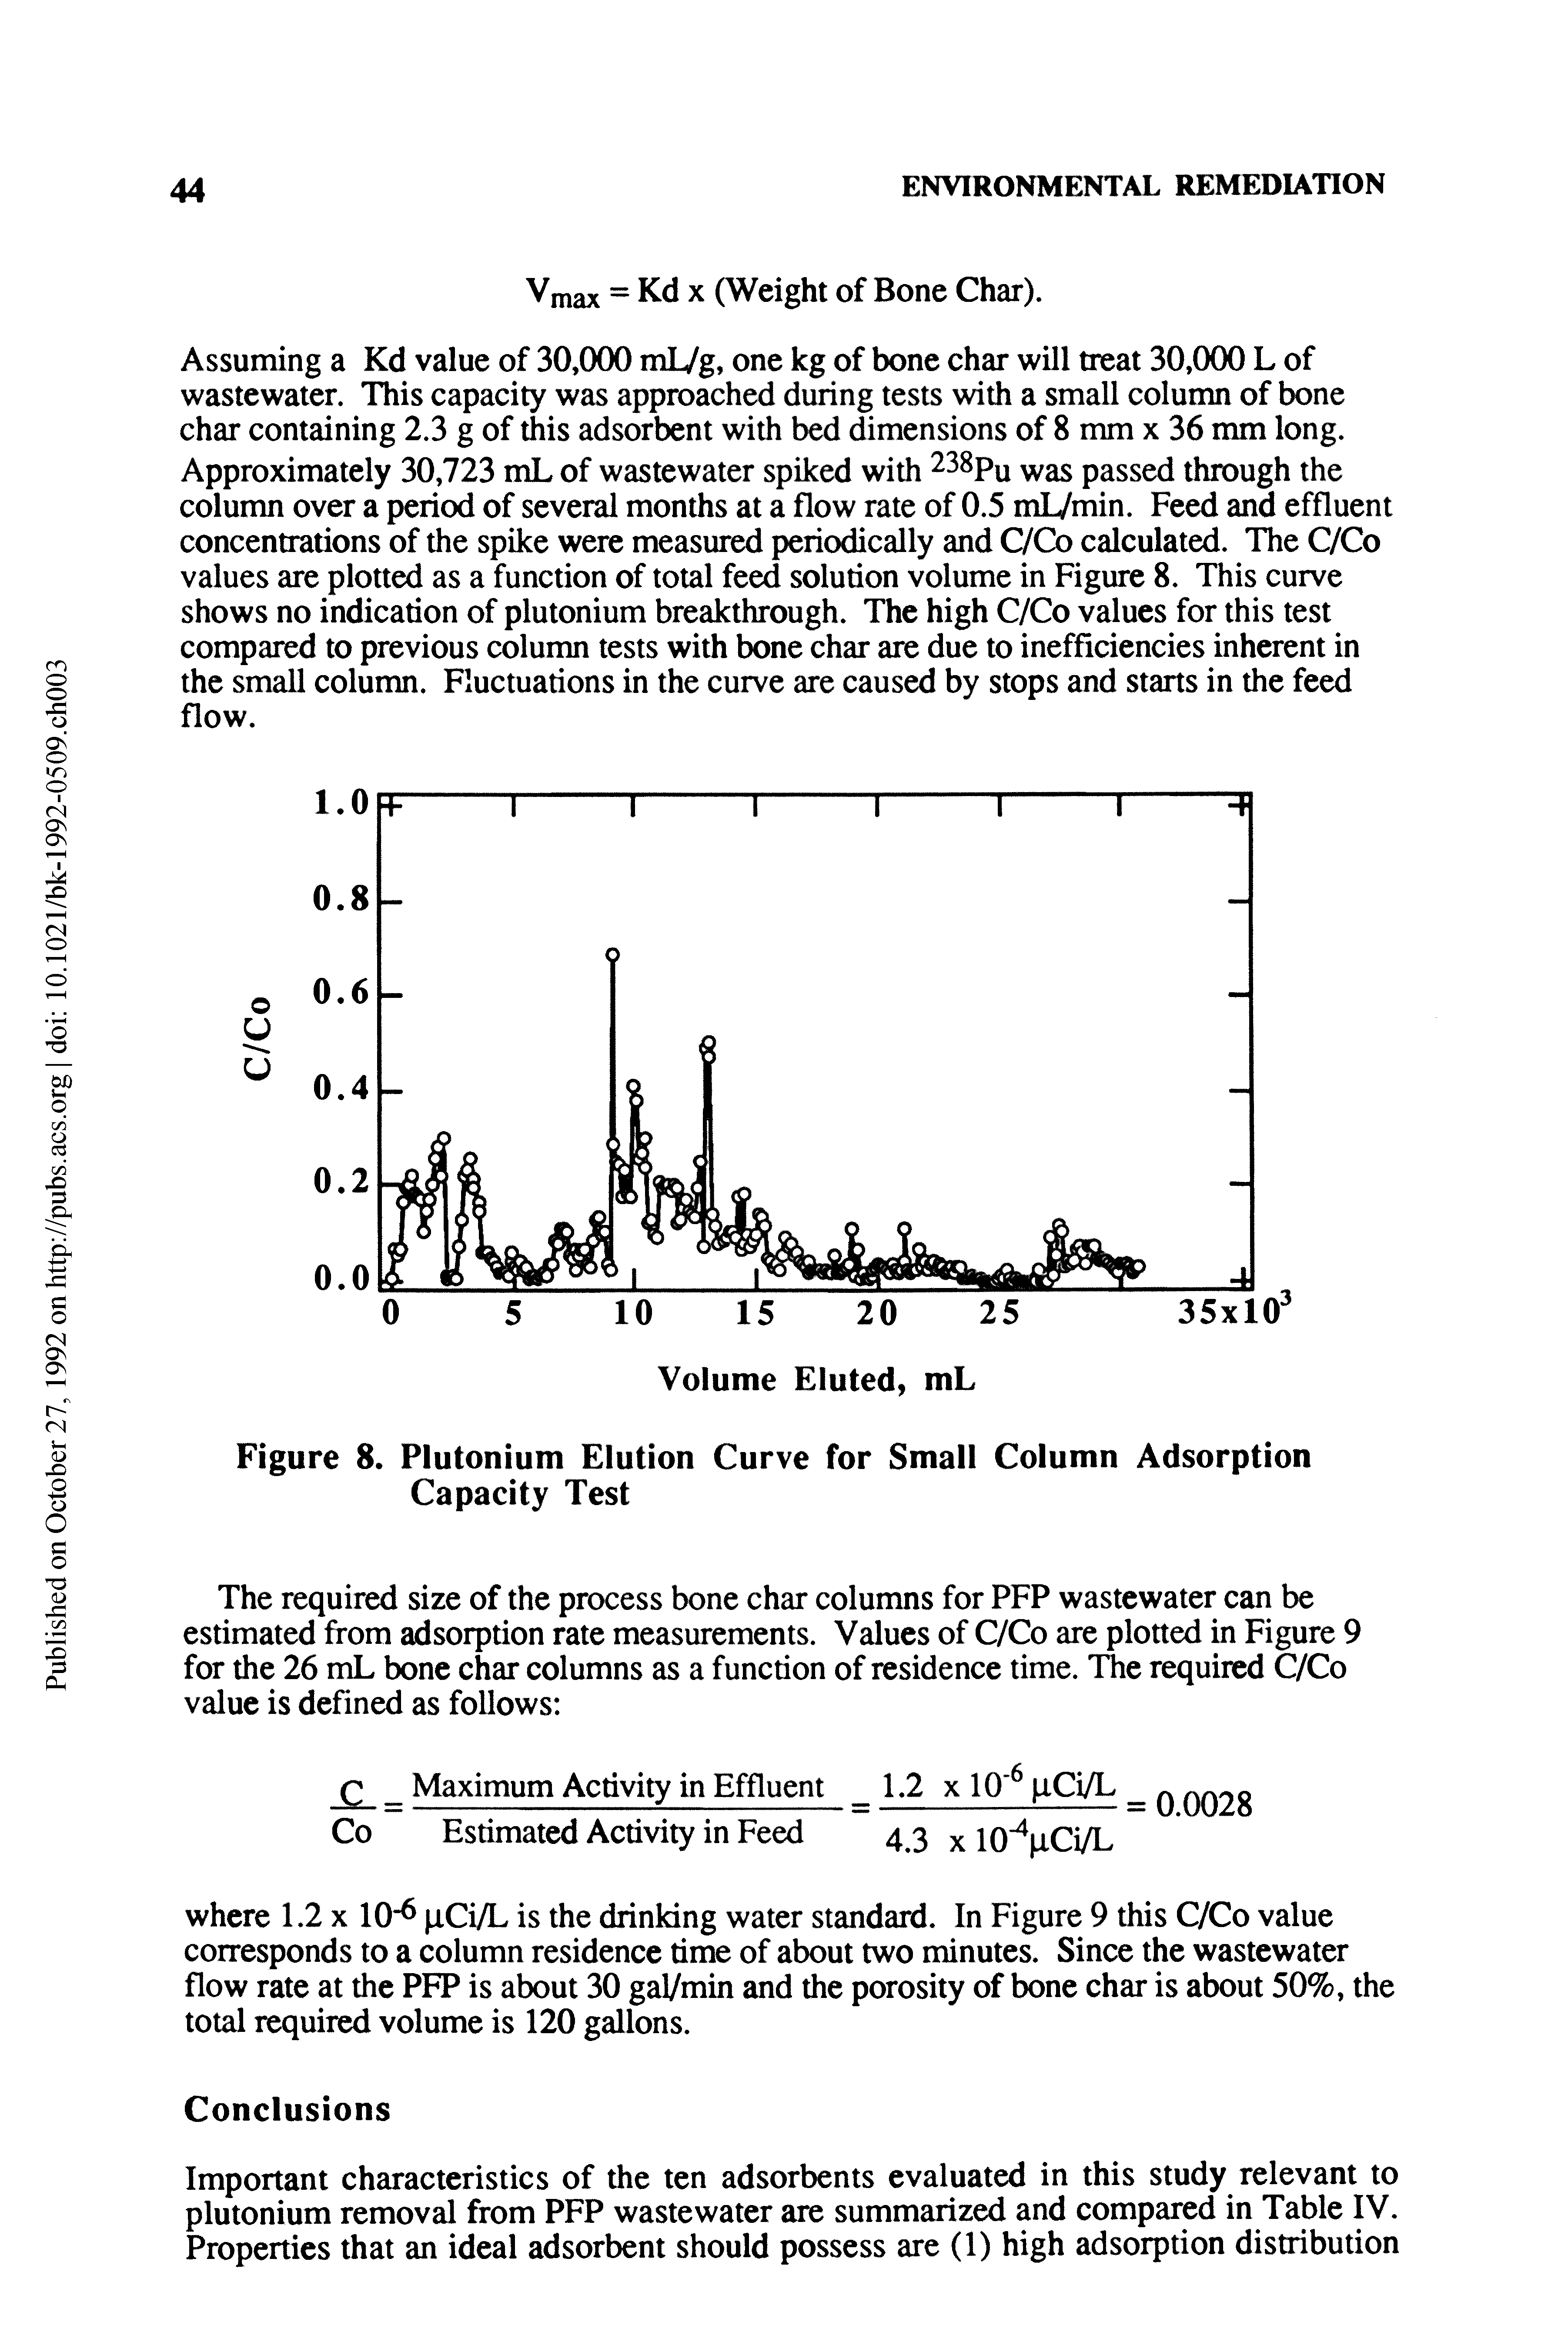 Figure 8. Plutonium Elution Curve for Small Column Adsorption Capacity Test...